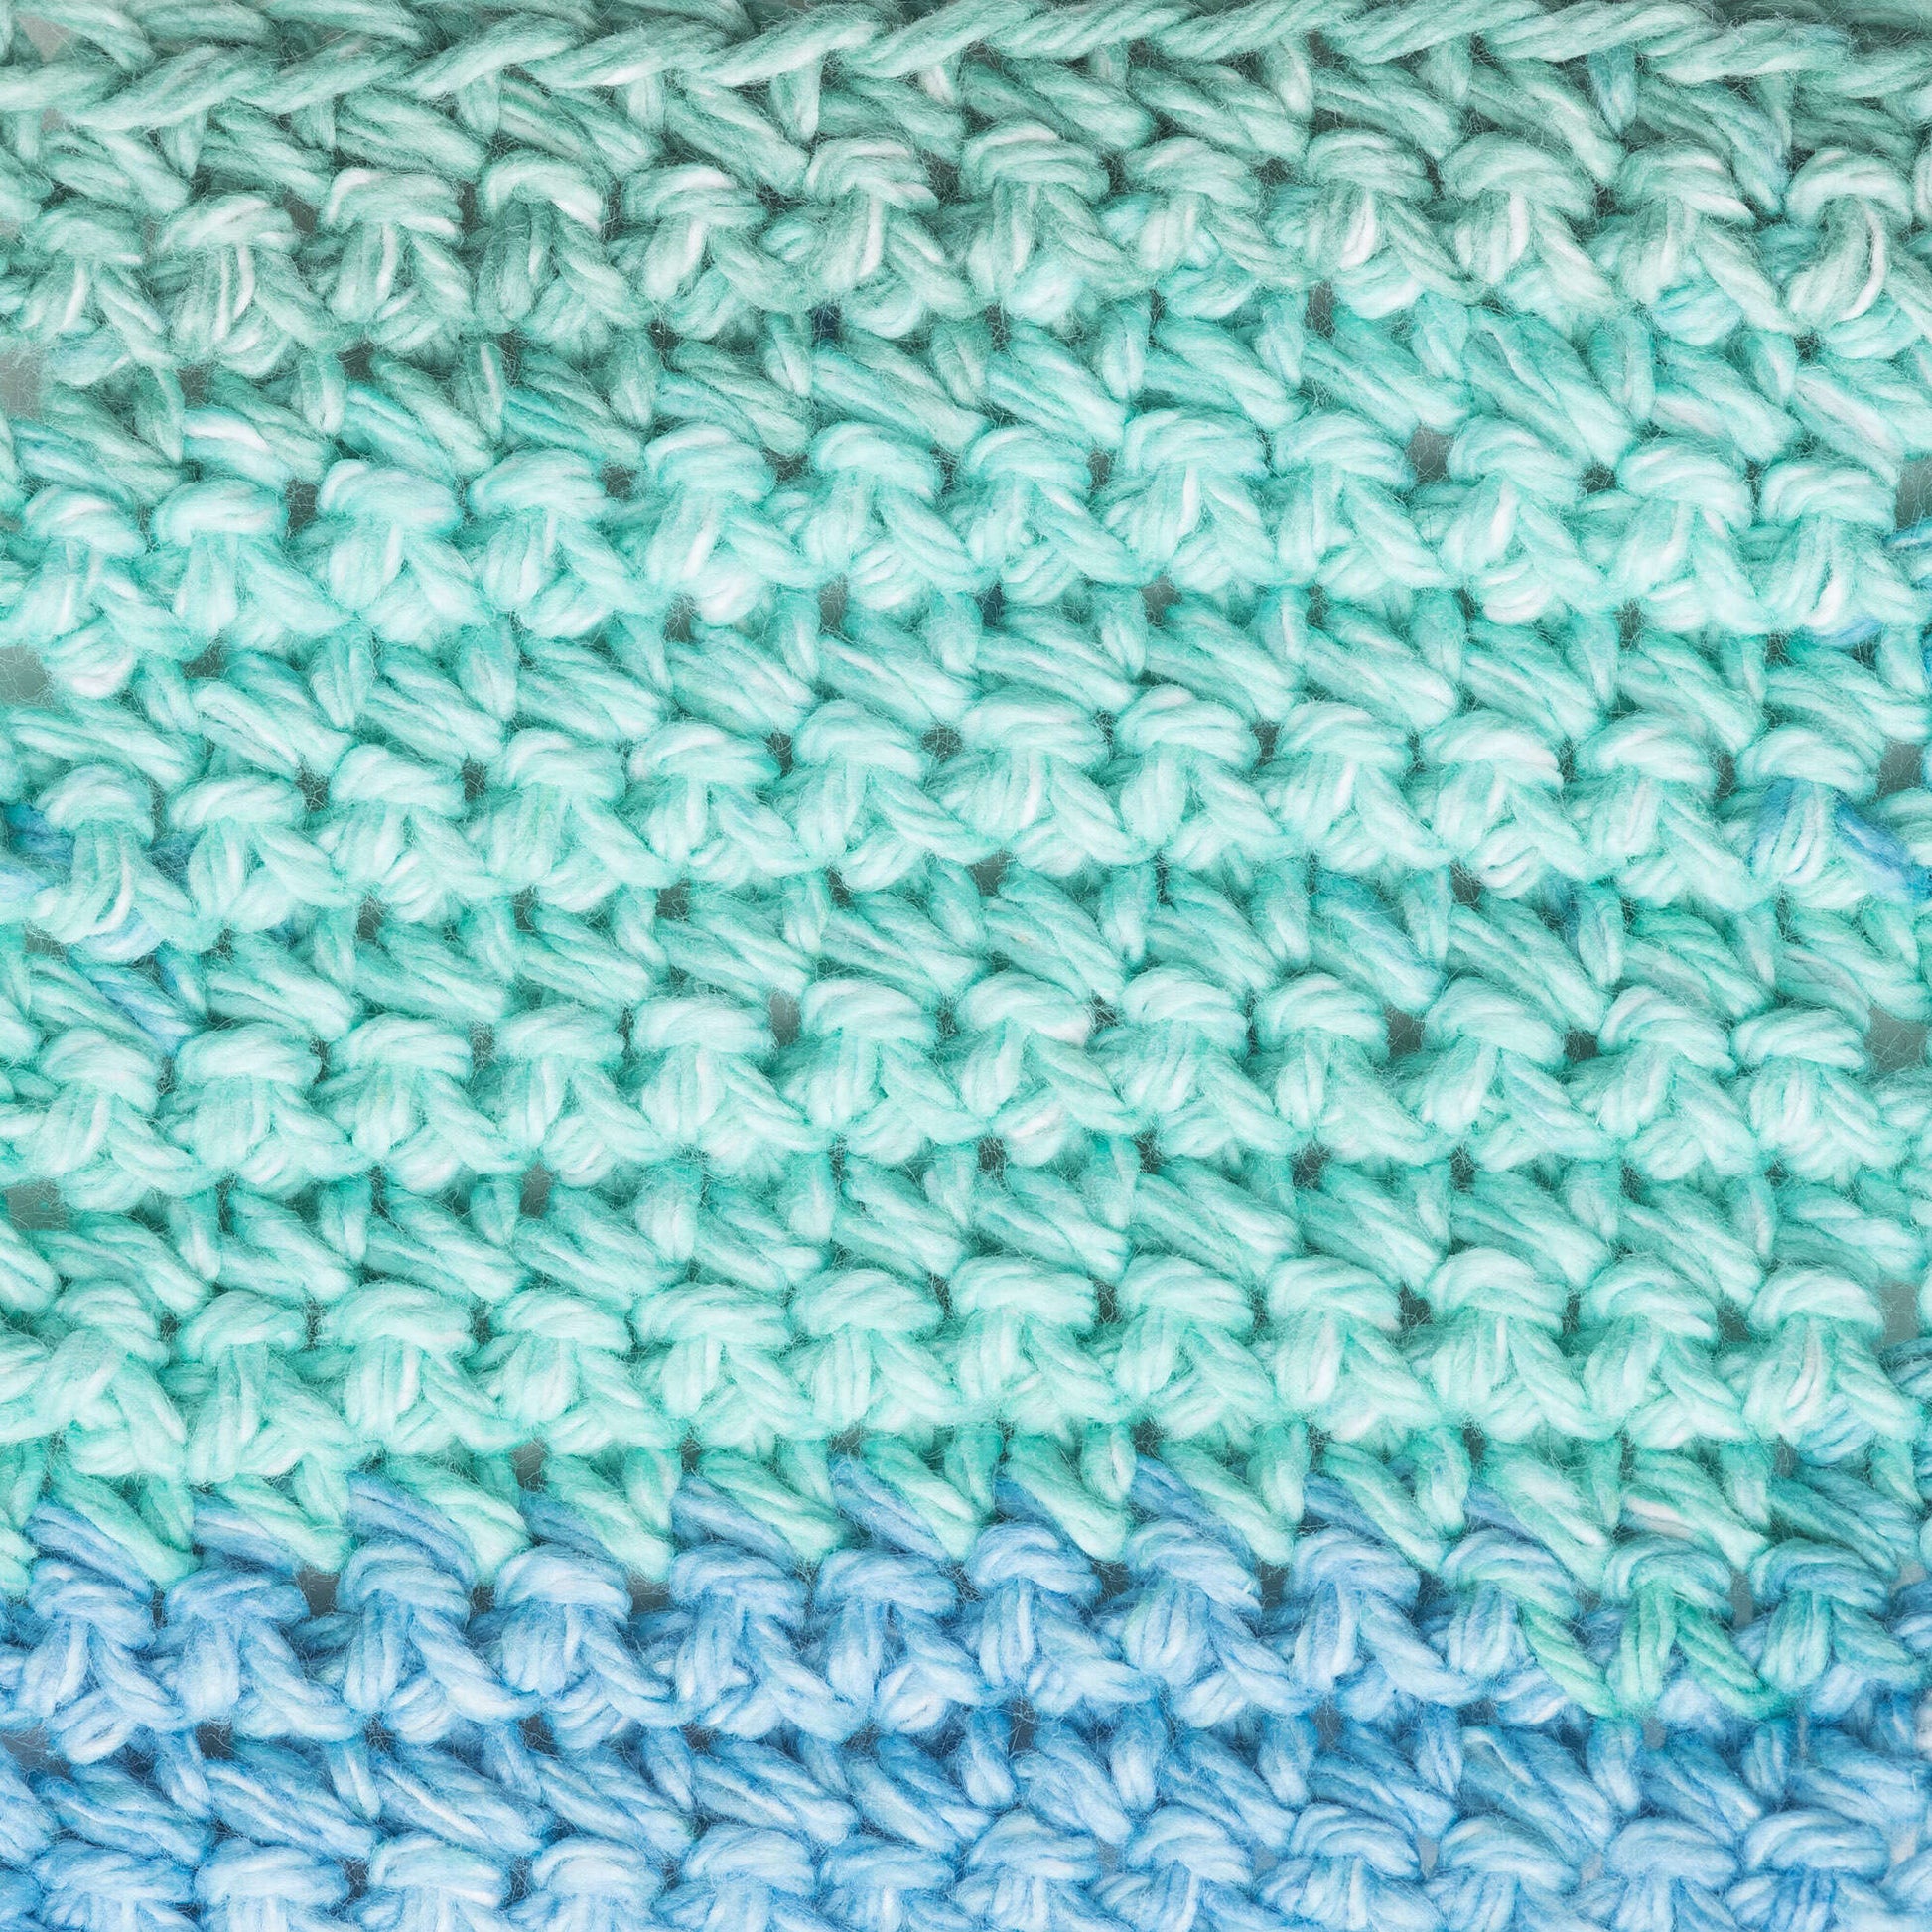 Bernat Handicrafter Cotton Stripes Yarn